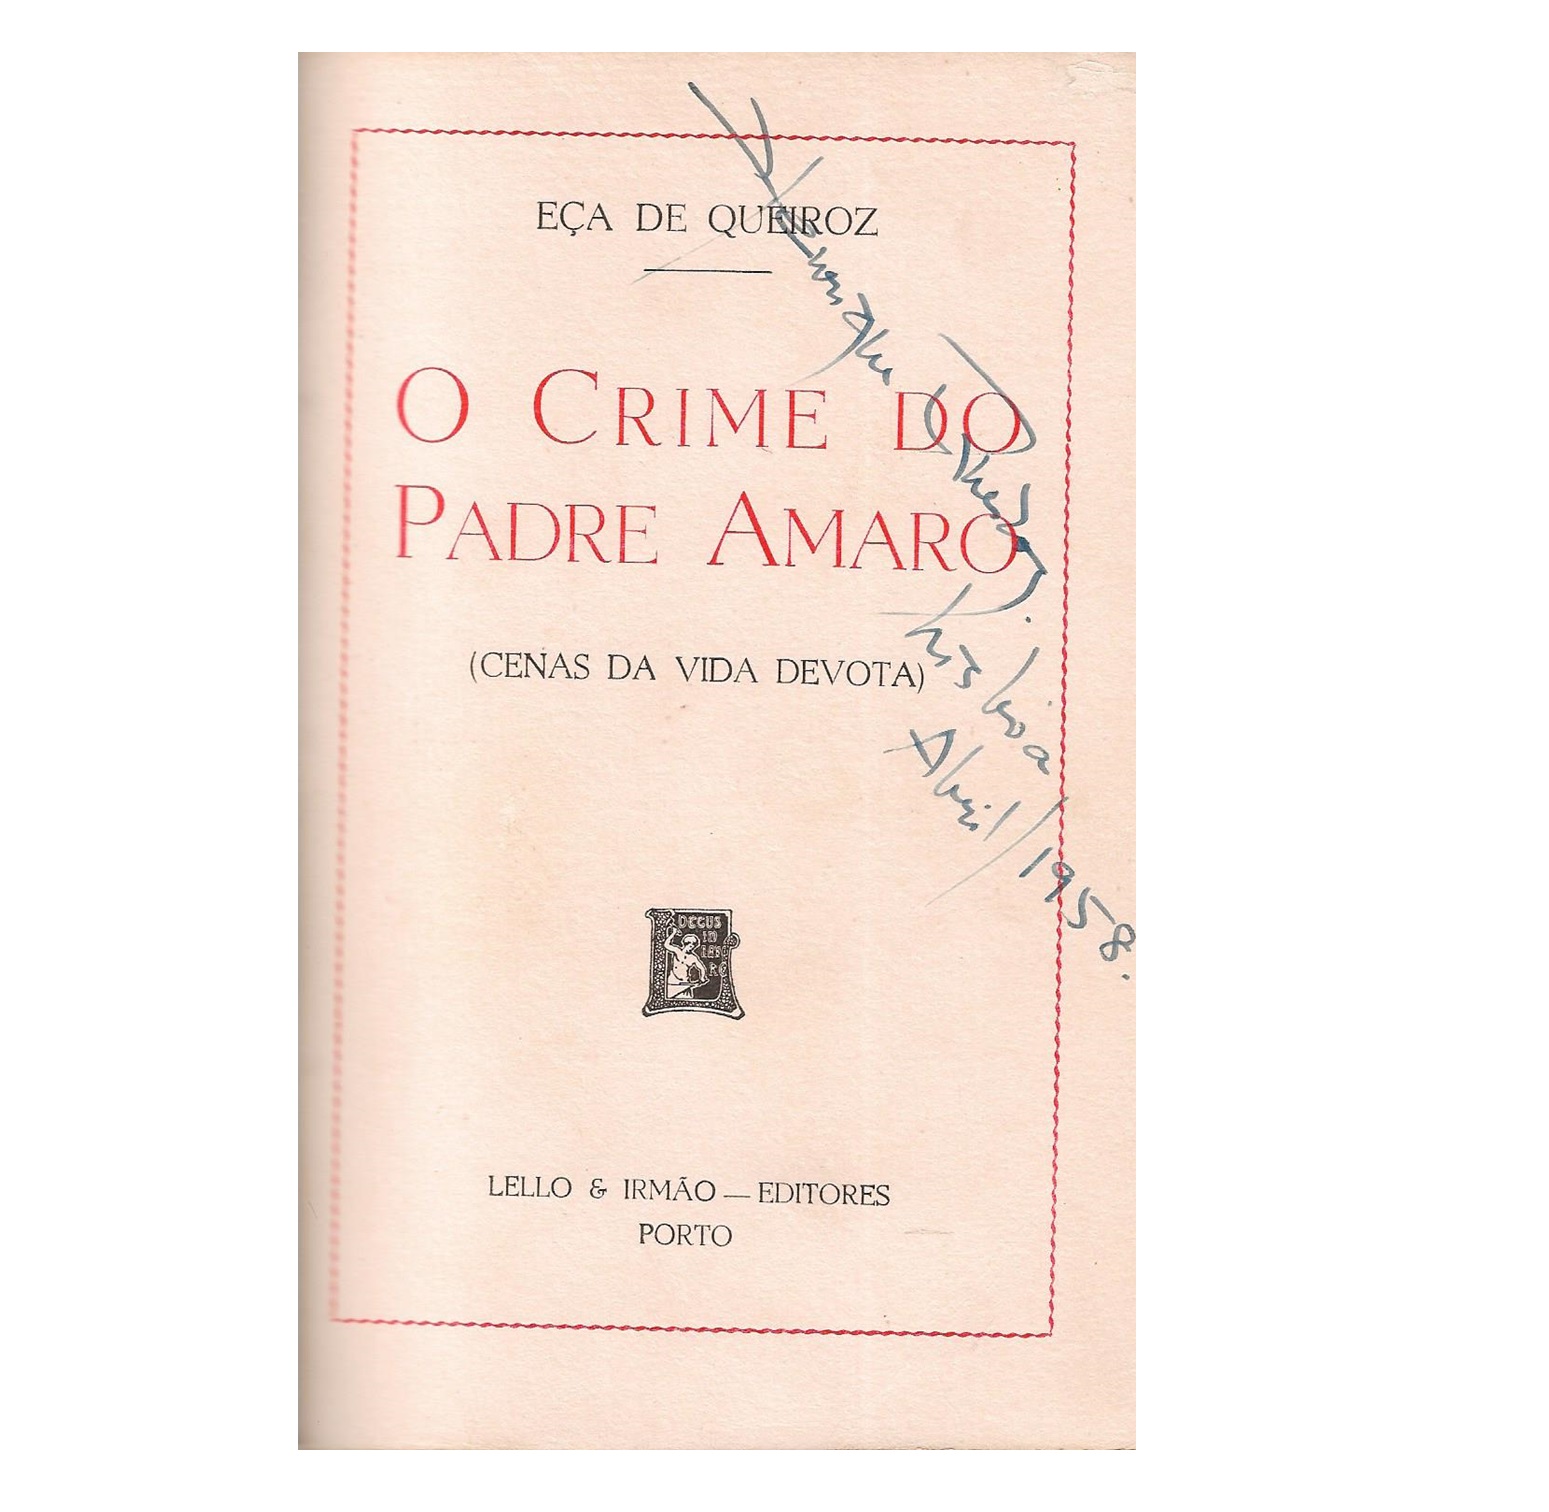 O CRIME DO PADRE AMARO: SCENAS DA VIDA DEVOTA